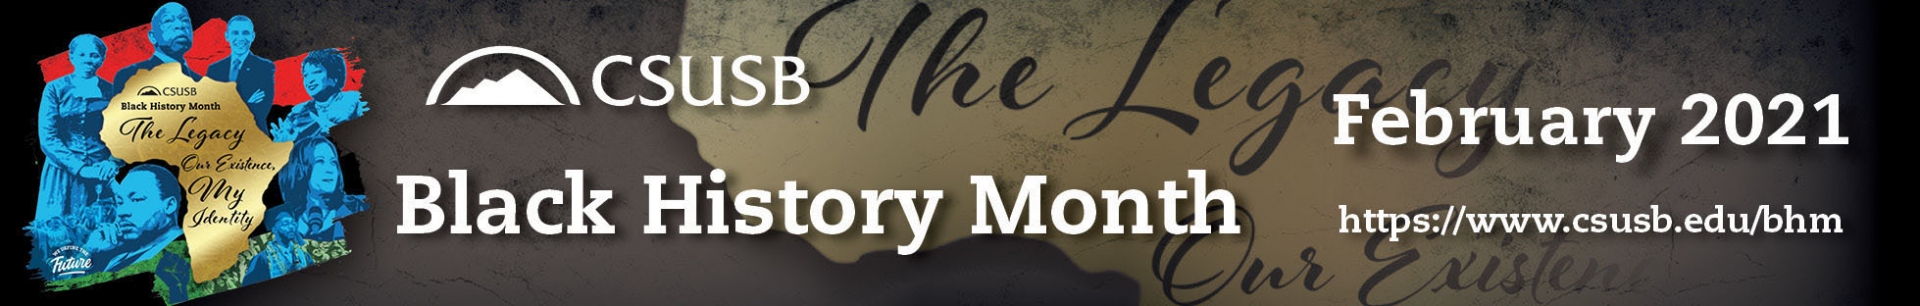 2021 Black History Month web banner